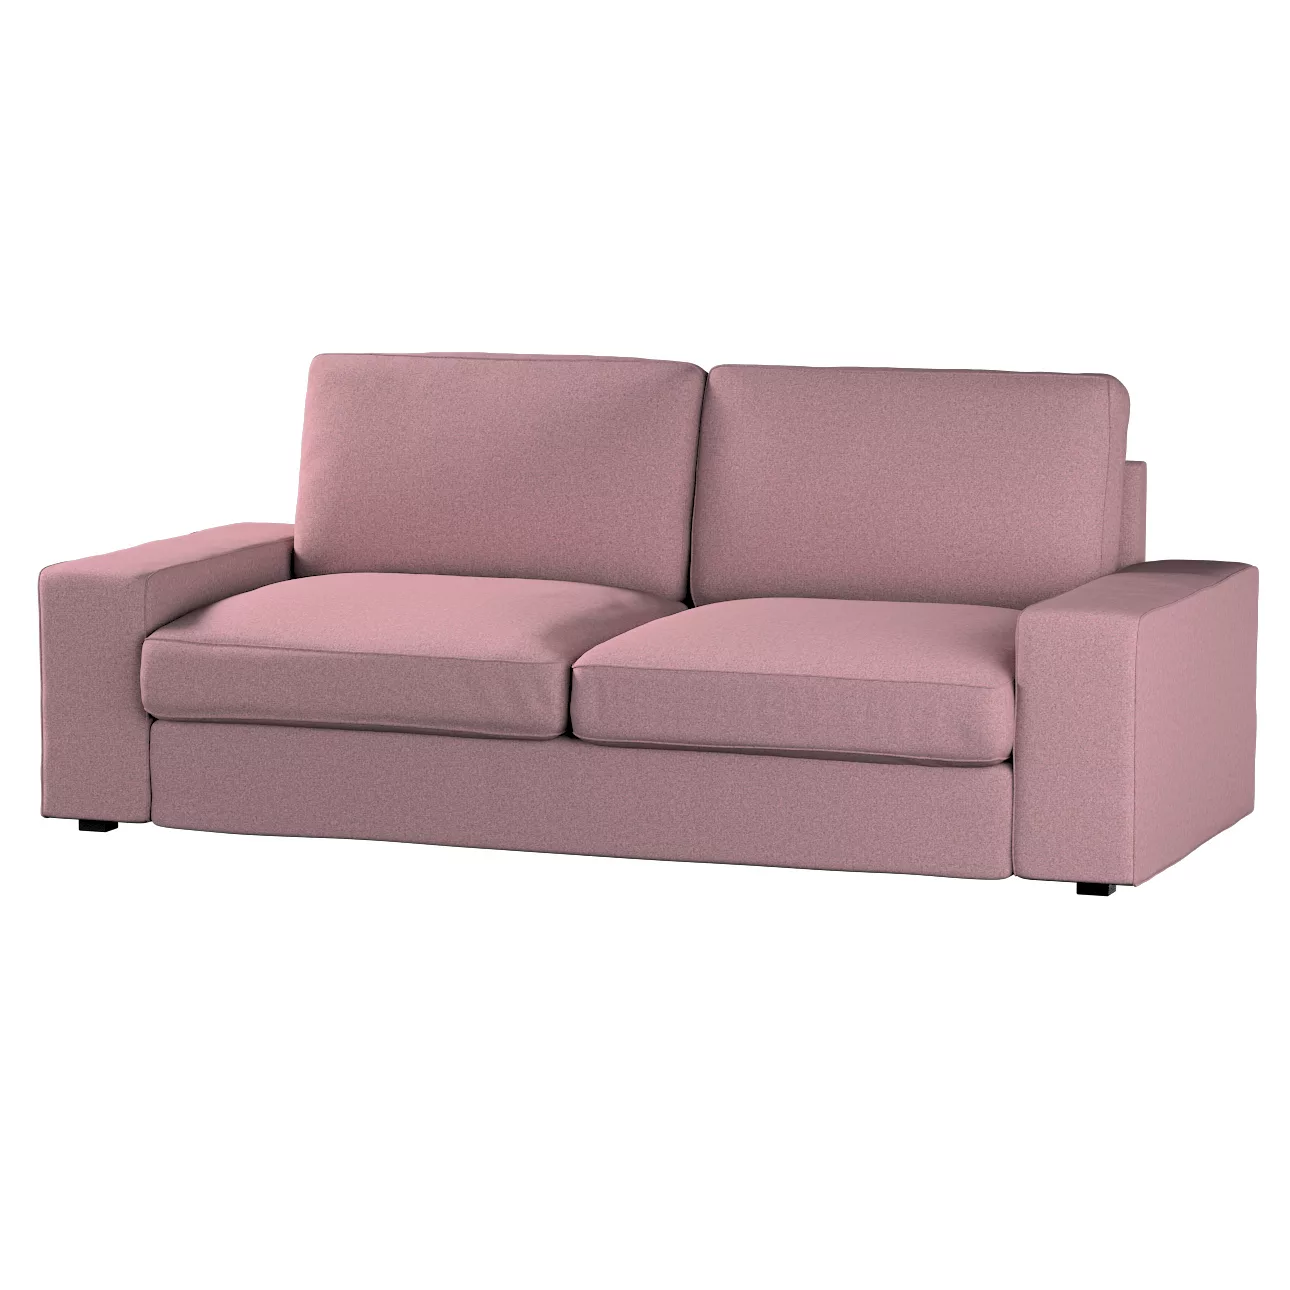 Bezug für Kivik 3-Sitzer Sofa, schwarz--rosa, Bezug für Sofa Kivik 3-Sitzer günstig online kaufen